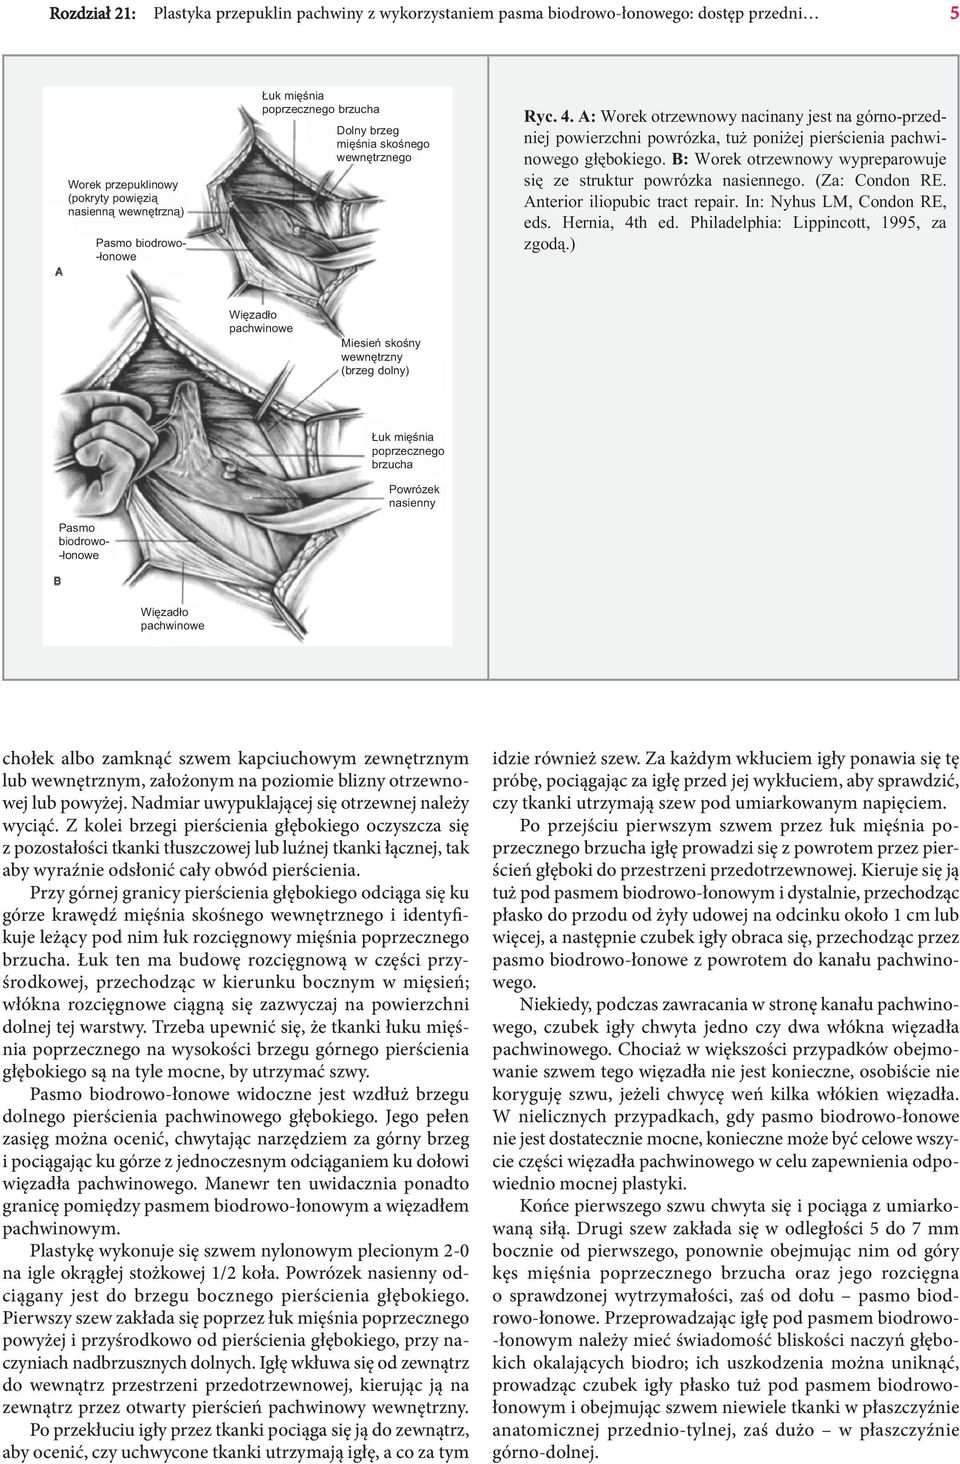 B: Worek otrzewnowy wypreparowuje się ze struktur powrózka nasiennego. (Za: Condon RE. Anterior iliopubic tract repair. In: Nyhus LM, Condon RE, eds. Hernia, 4th ed.